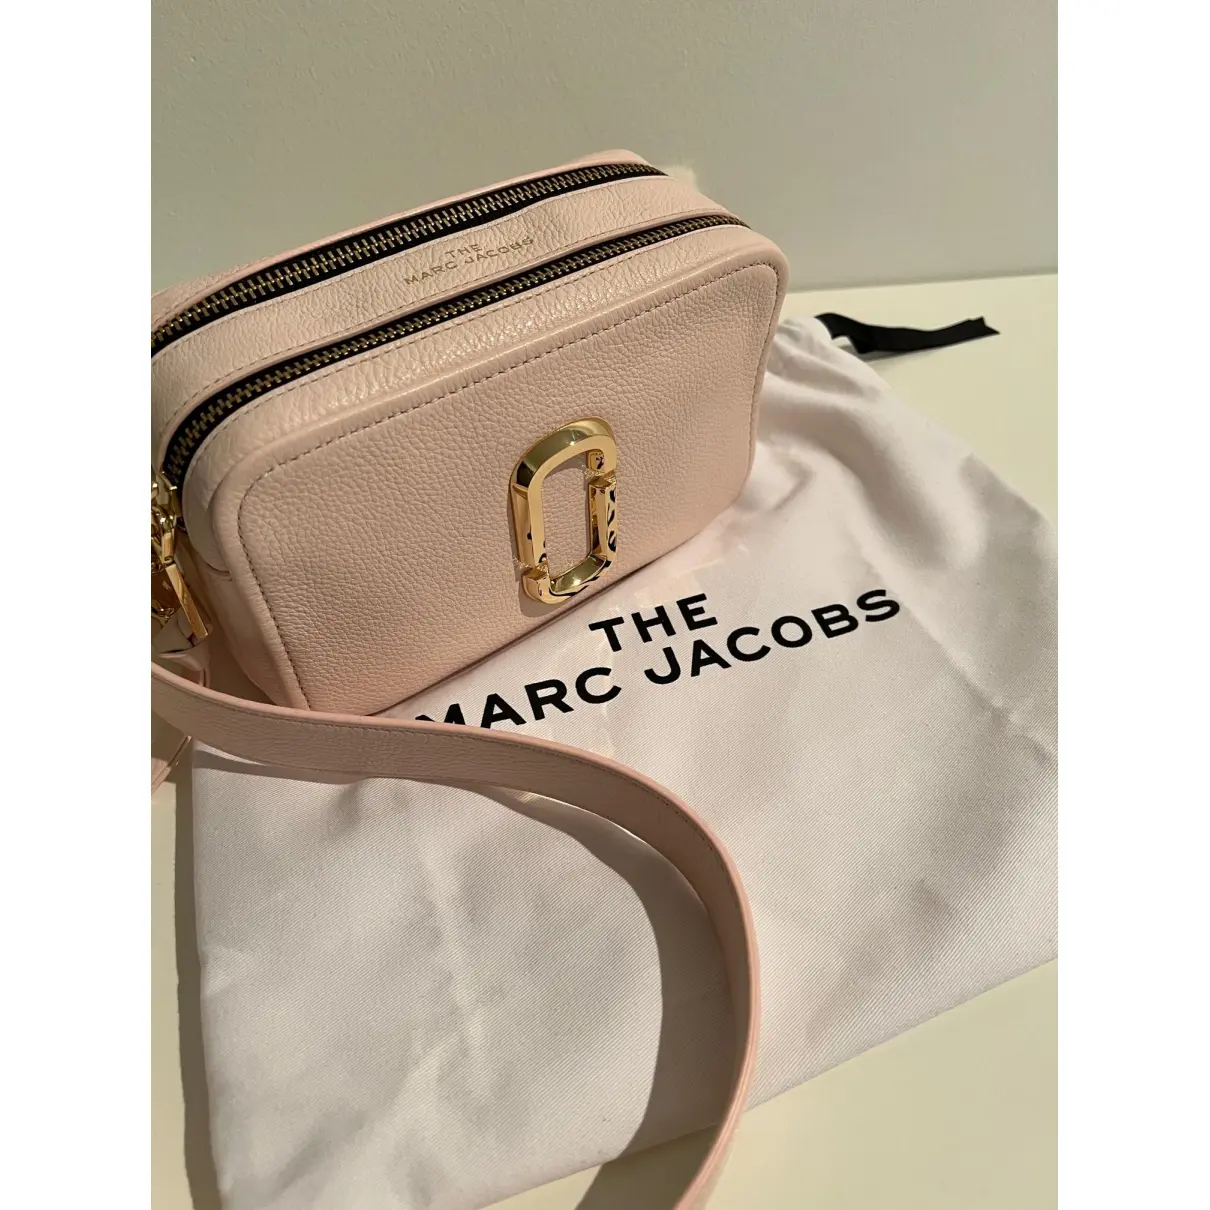 Luxury Marc Jacobs Handbags Women